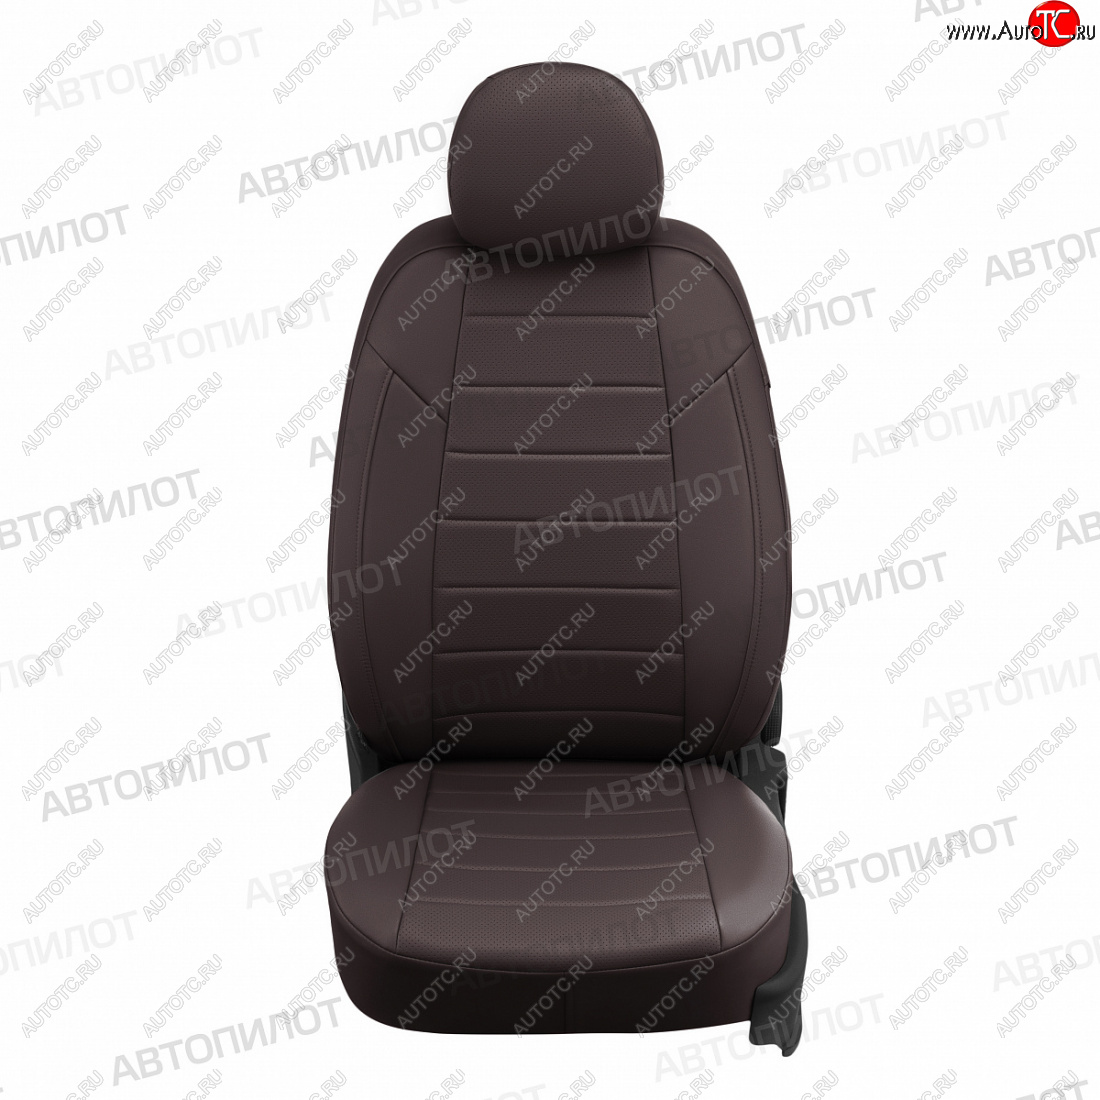 7 799 р. Чехлы сидений (экокожа) Автопилот Ромб  Honda CR-V  RE1,RE2,RE3,RE4,RE5,RE7 (2007-2012) (шоколад)